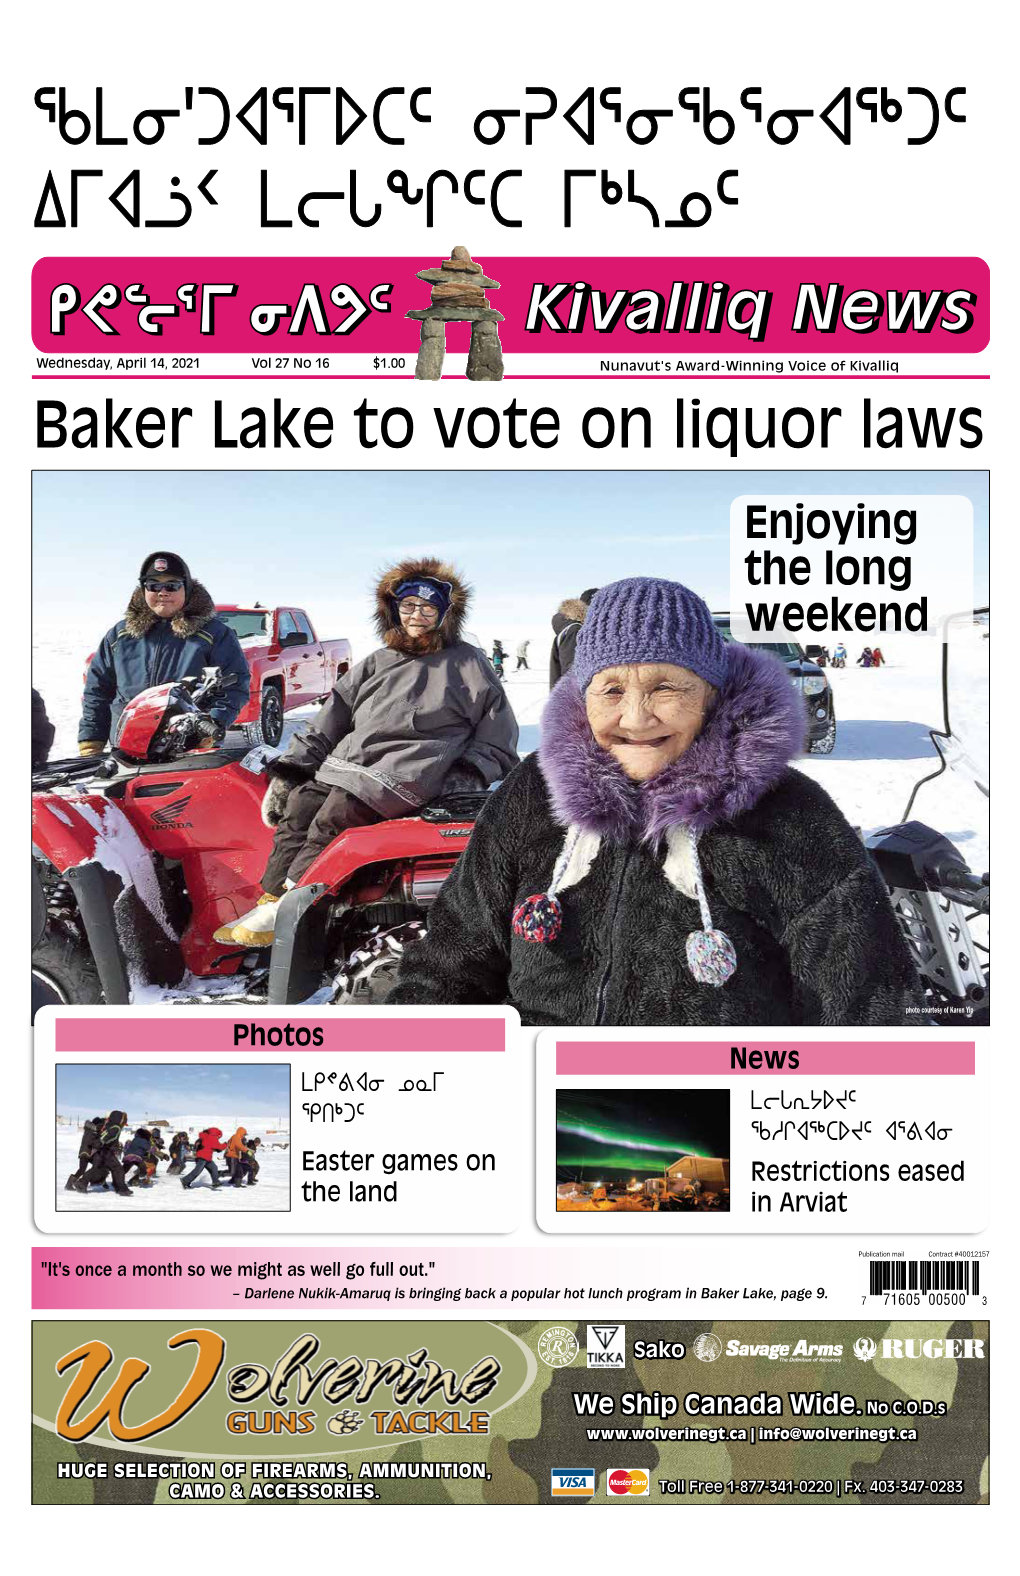 Wednesday, April 14, 2021 Vol 27 No 16 $1.00 Nunavut's Award-Winning Voice of Kivalliq Baker Lake to Vote on Liquor Laws Enjoying the Long Weekend